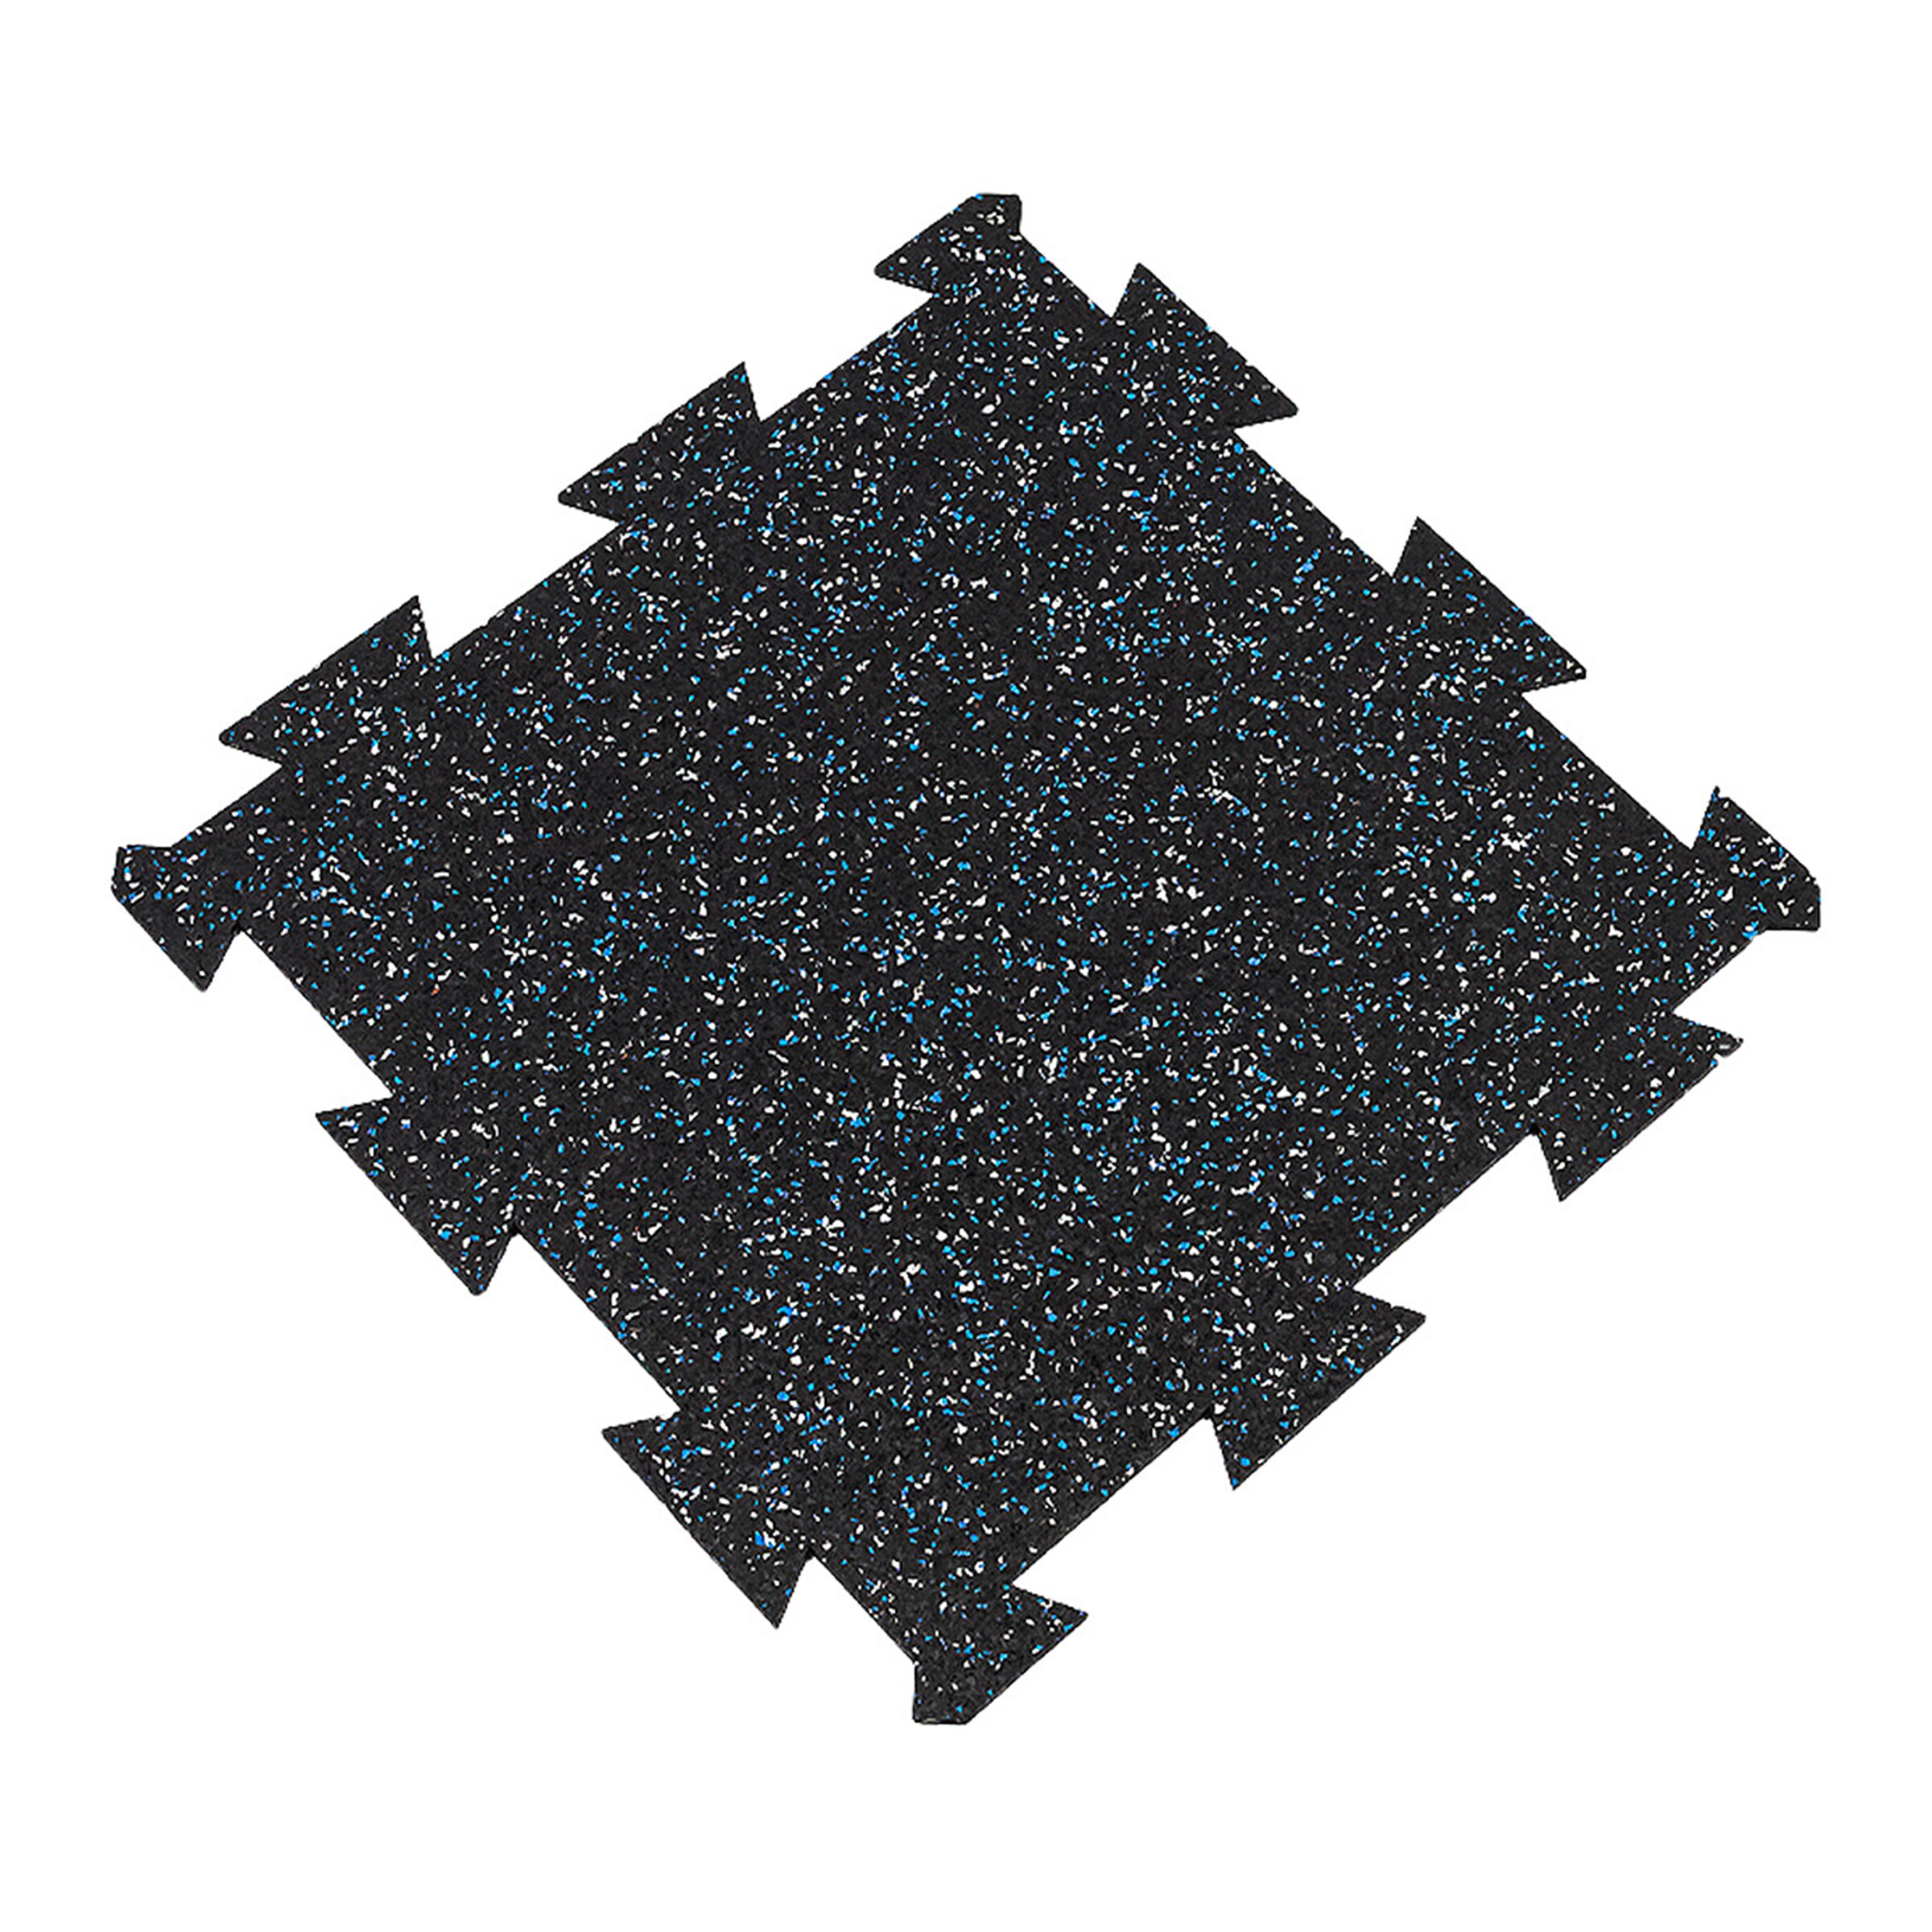 Černo-bílo-modrá gumová modulová puzzle dlaždice (střed) FLOMA FitFlo SF1050 - délka 50 cm, šířka 50 cm, výška 0,8 cm